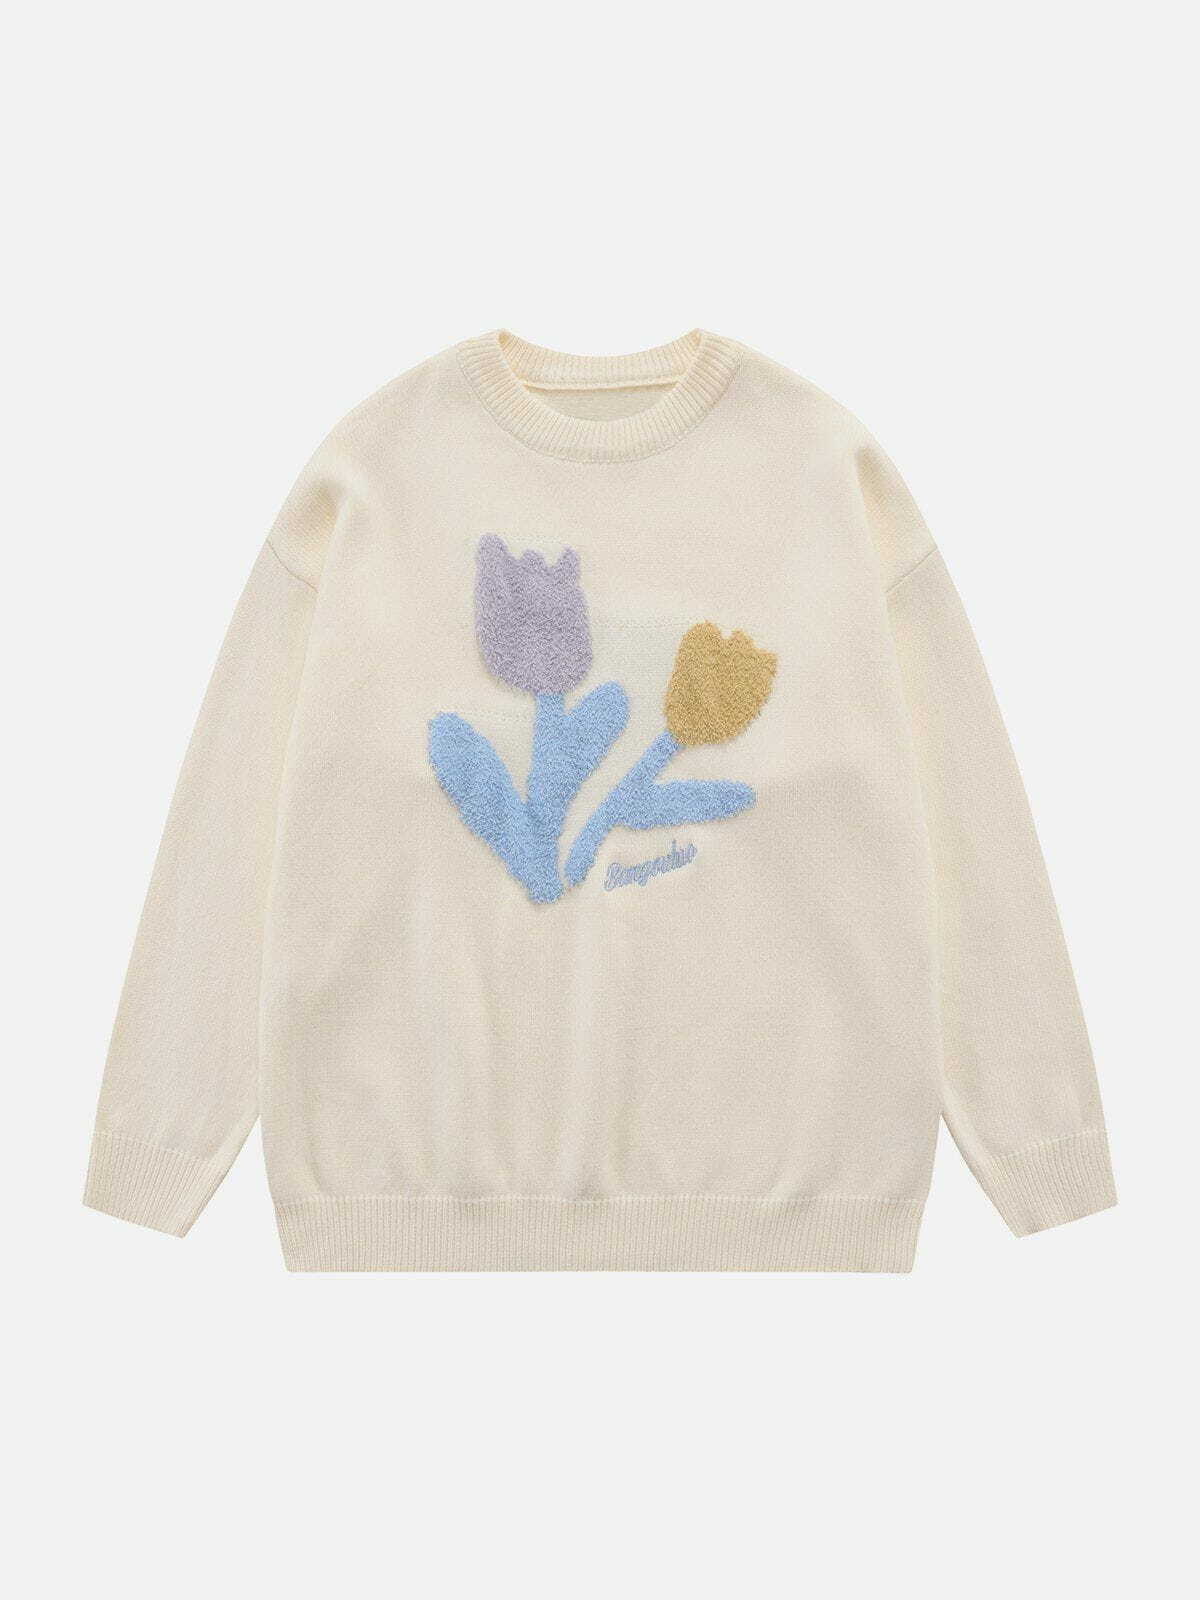 plush floral sweater vibrant & cozy streetwear 2958